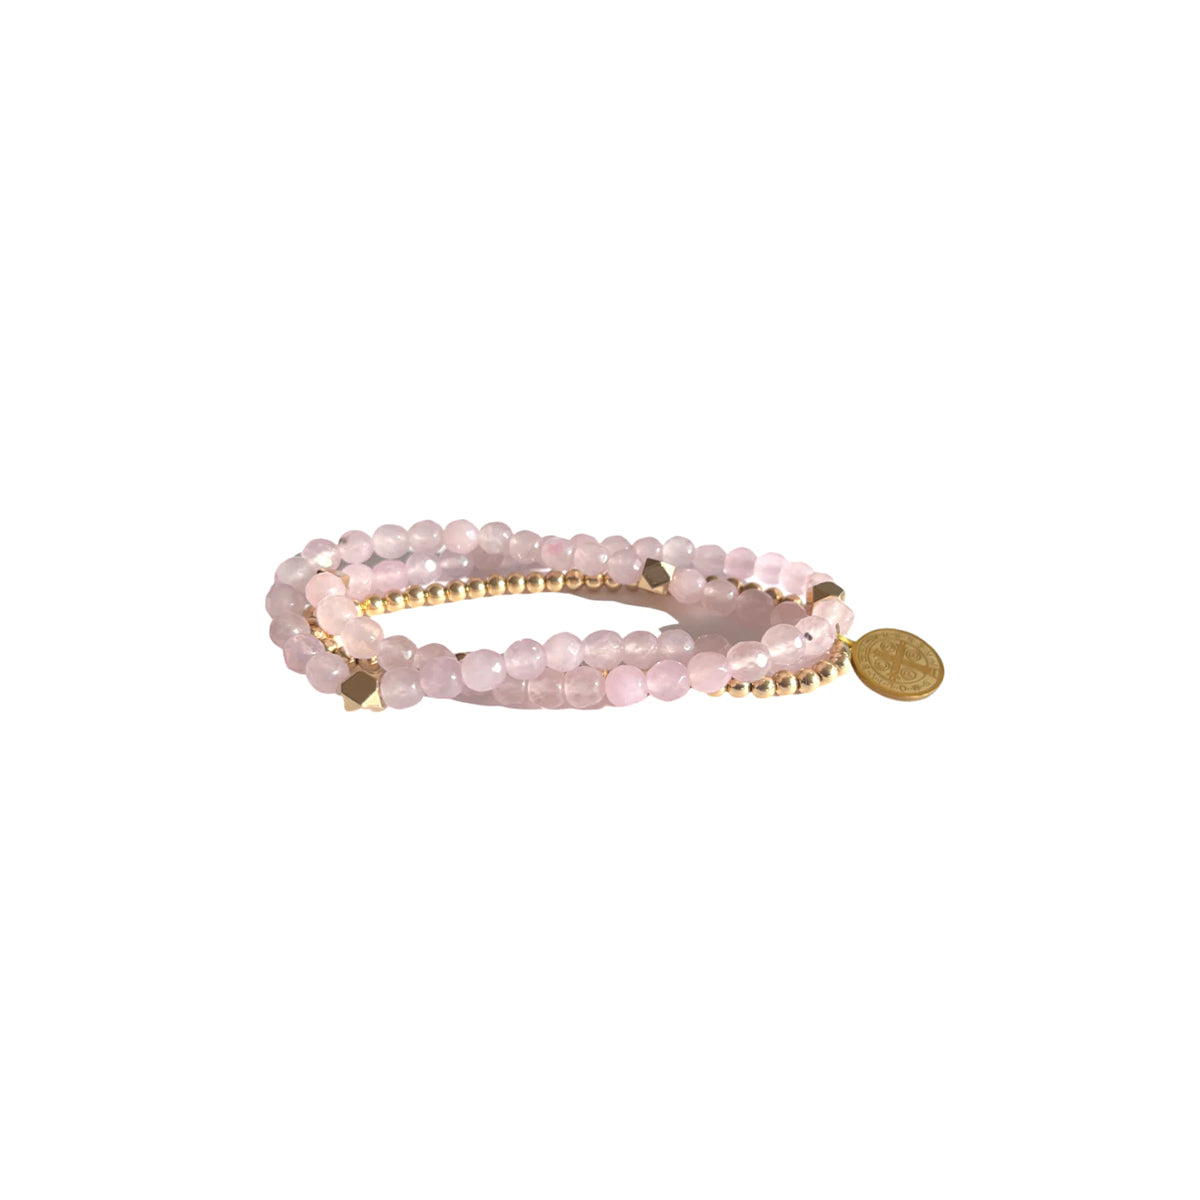 Bracelets | Drop Out Store | Jewellery | New Zealand